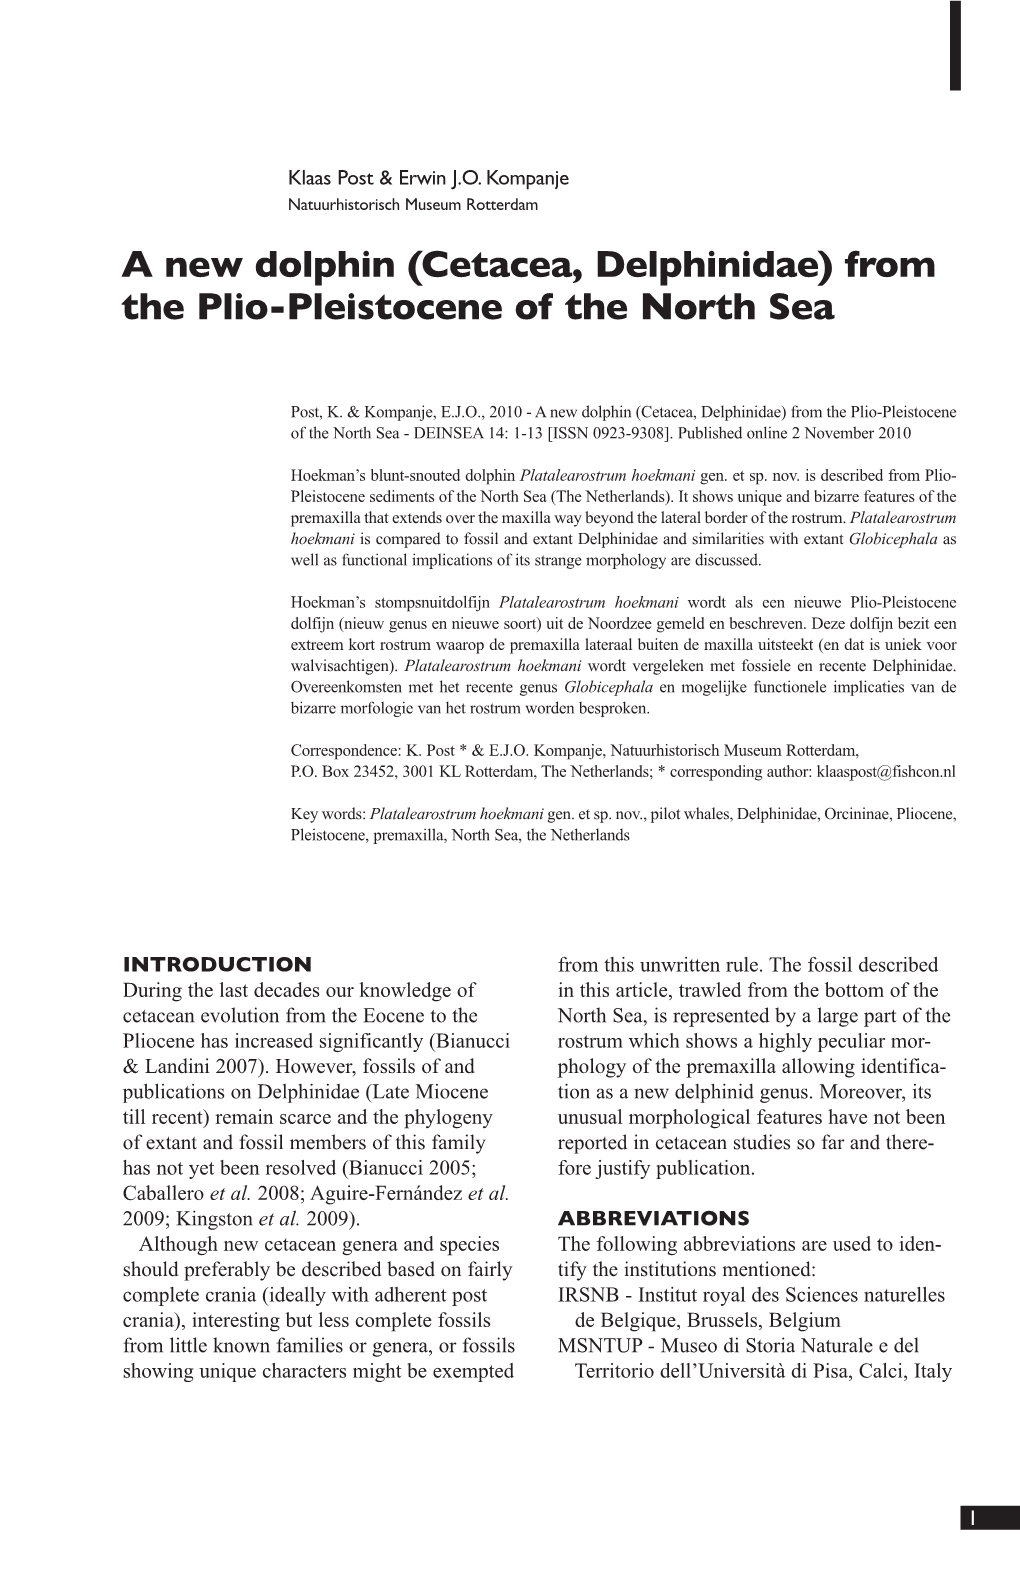 Cetacea, Delphinidae) from the Plio-Pleistocene of the North Sea